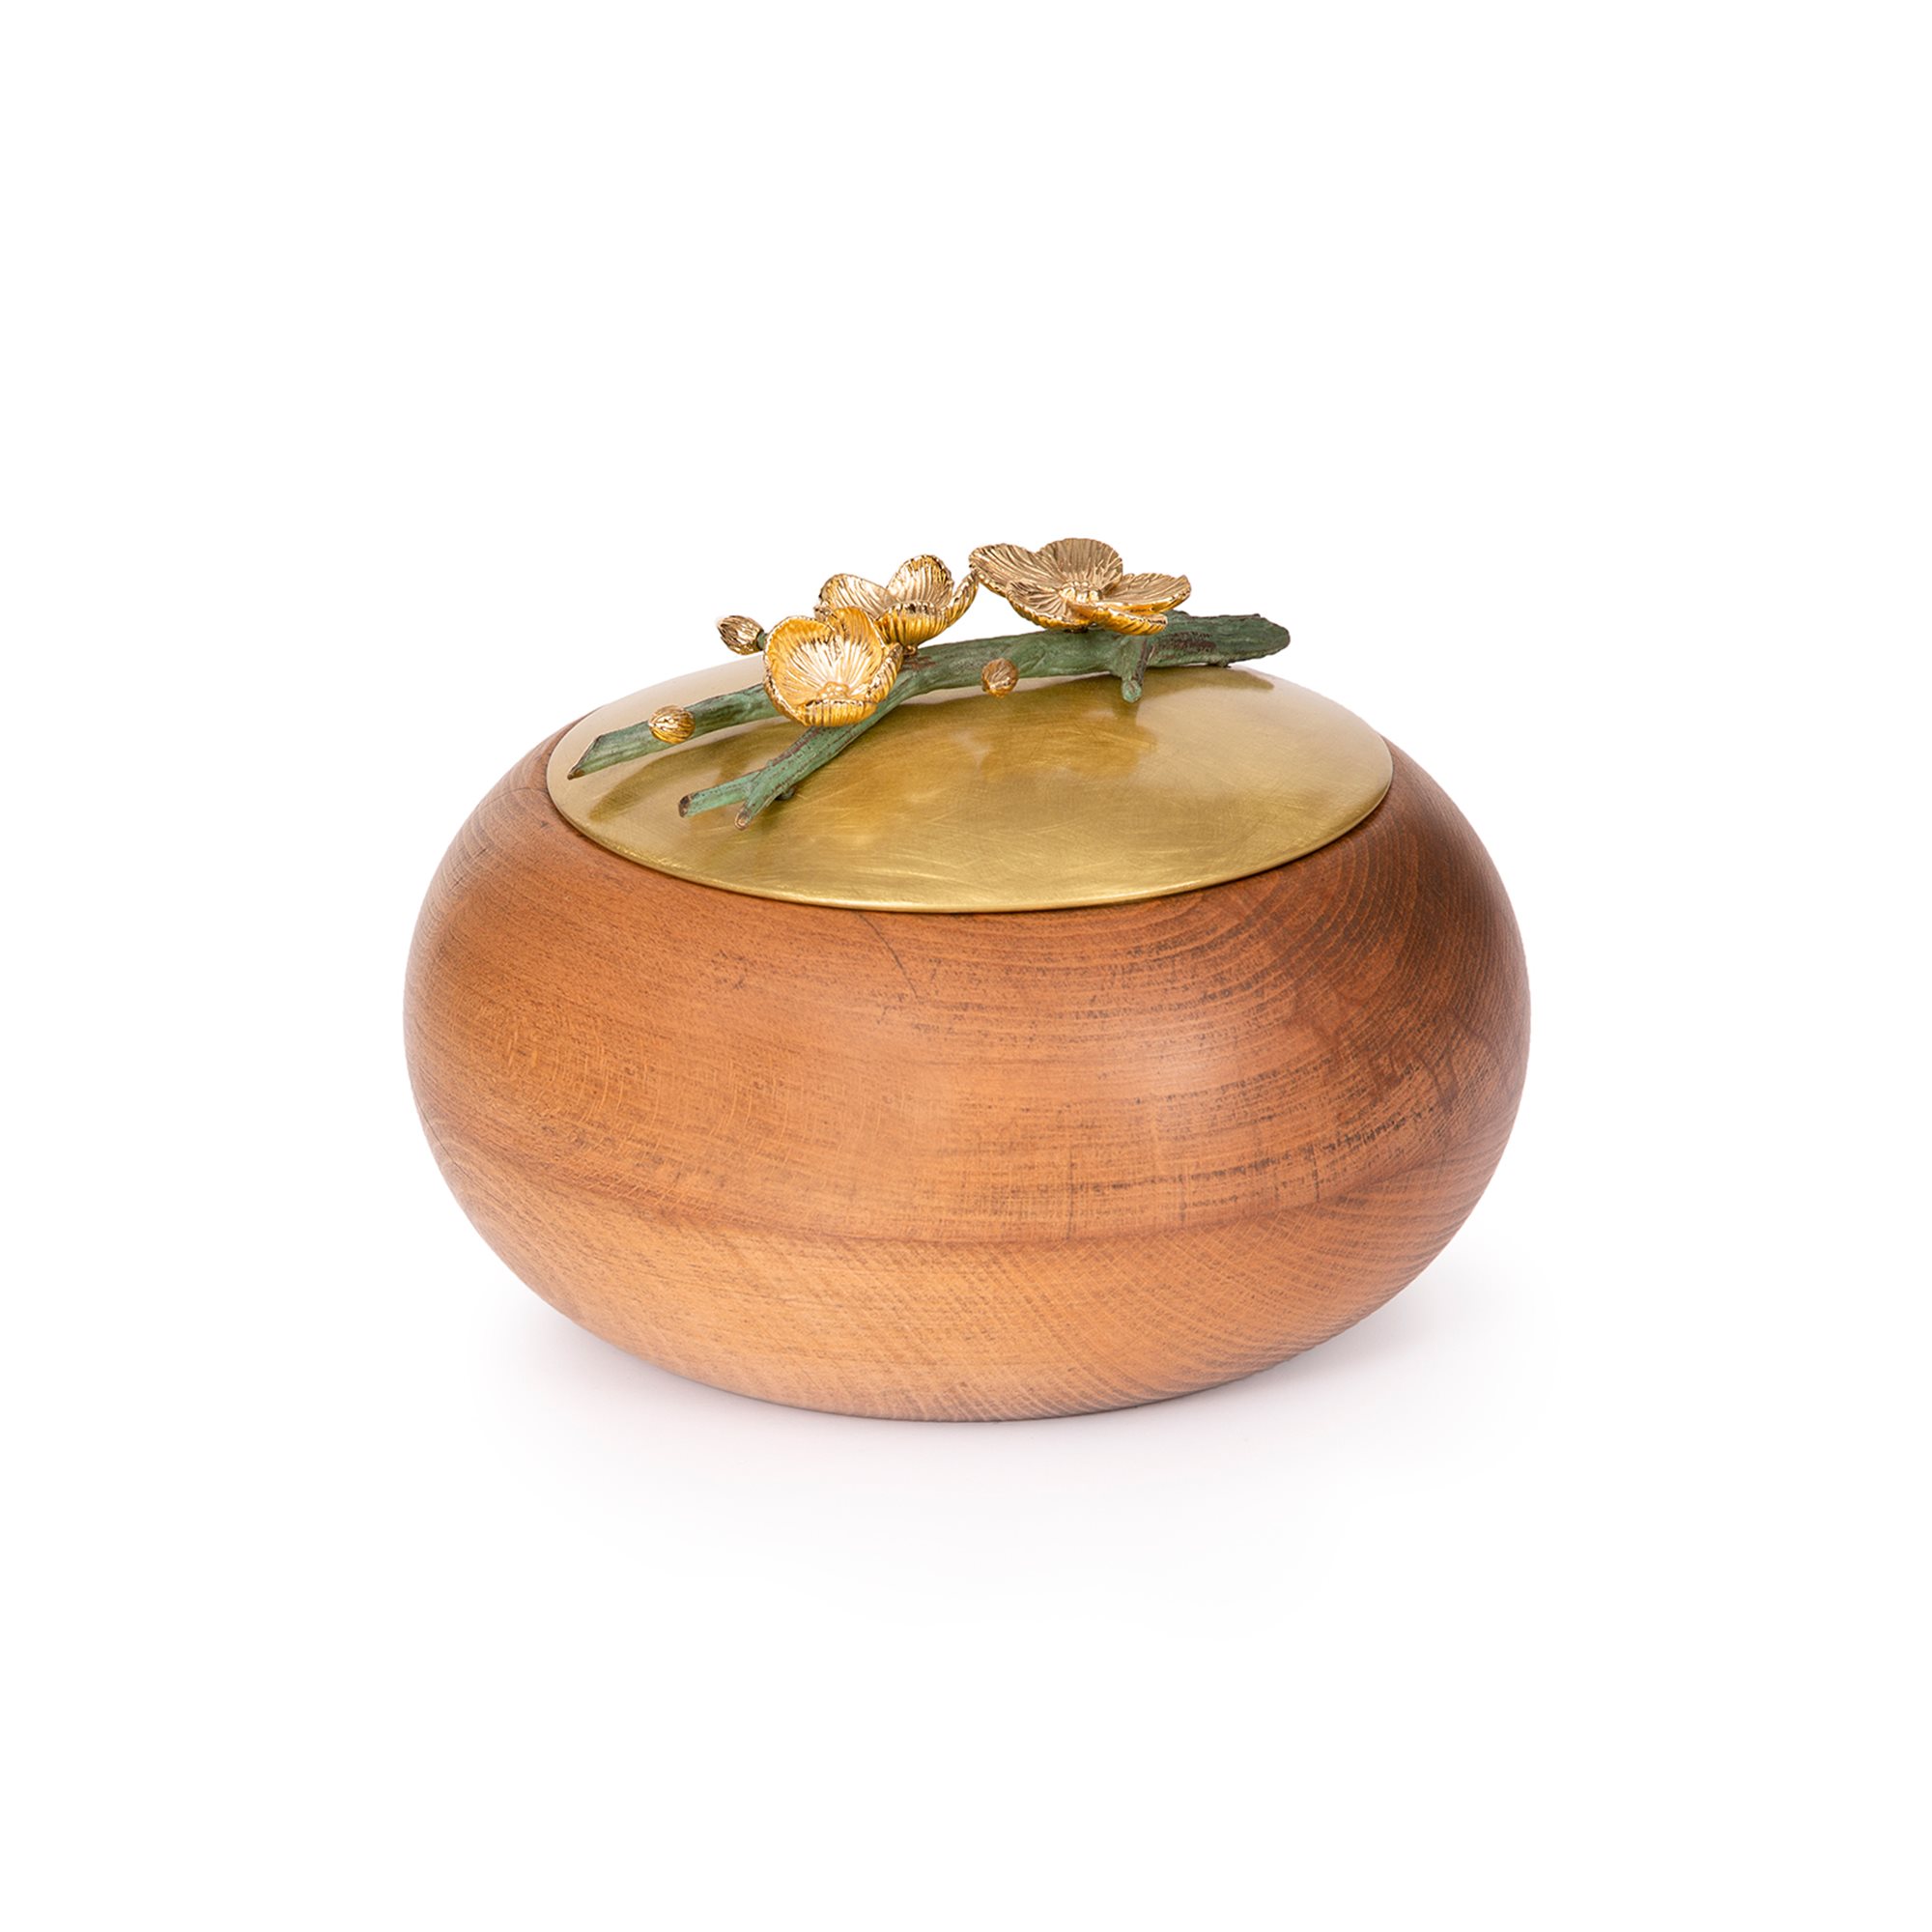 Marina Wood Bowl with Lid (Size C3)